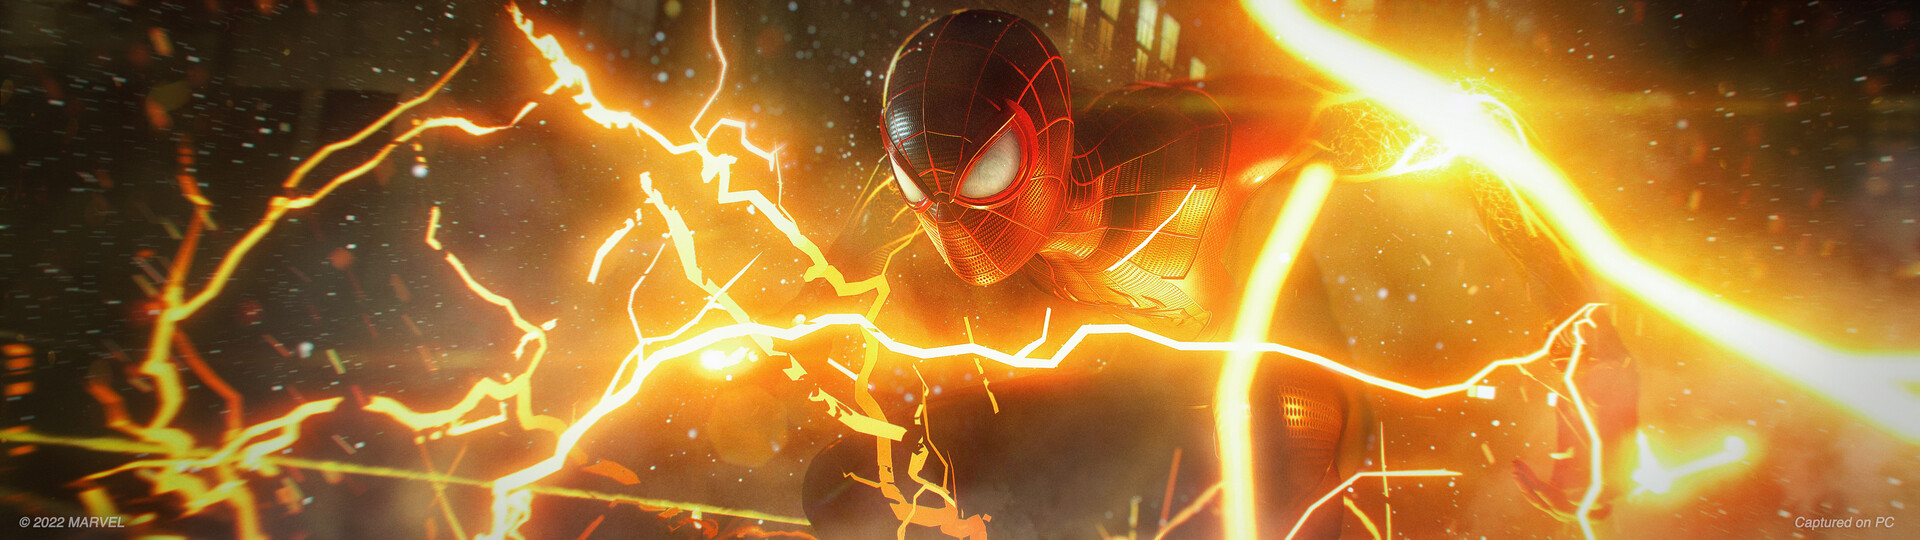 Marvel's Spider-Man: Miles Morales on Steam